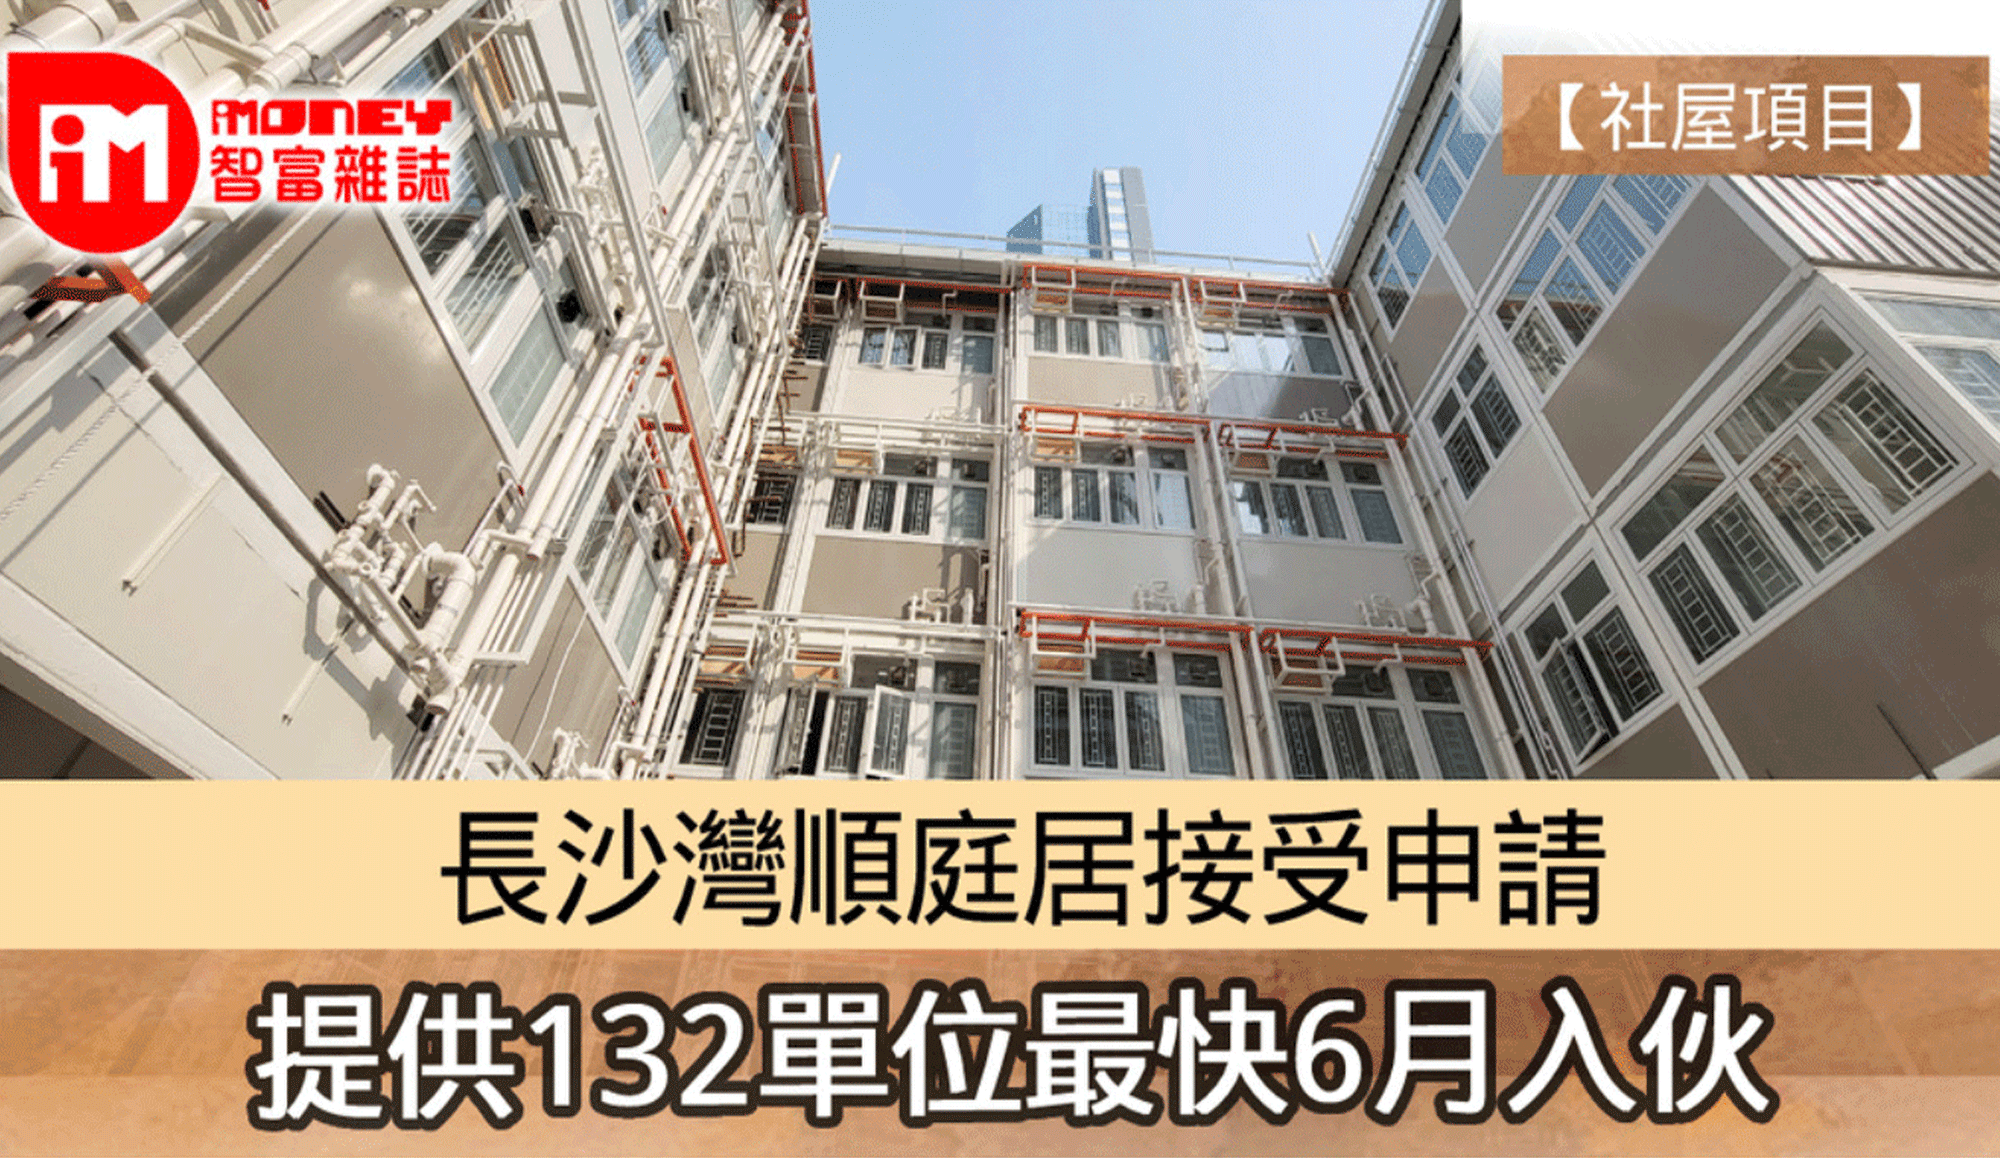 Cover Image - HKET - Social Housing Project - Cheung Sha Wan “Shun Ting Terraced Home”